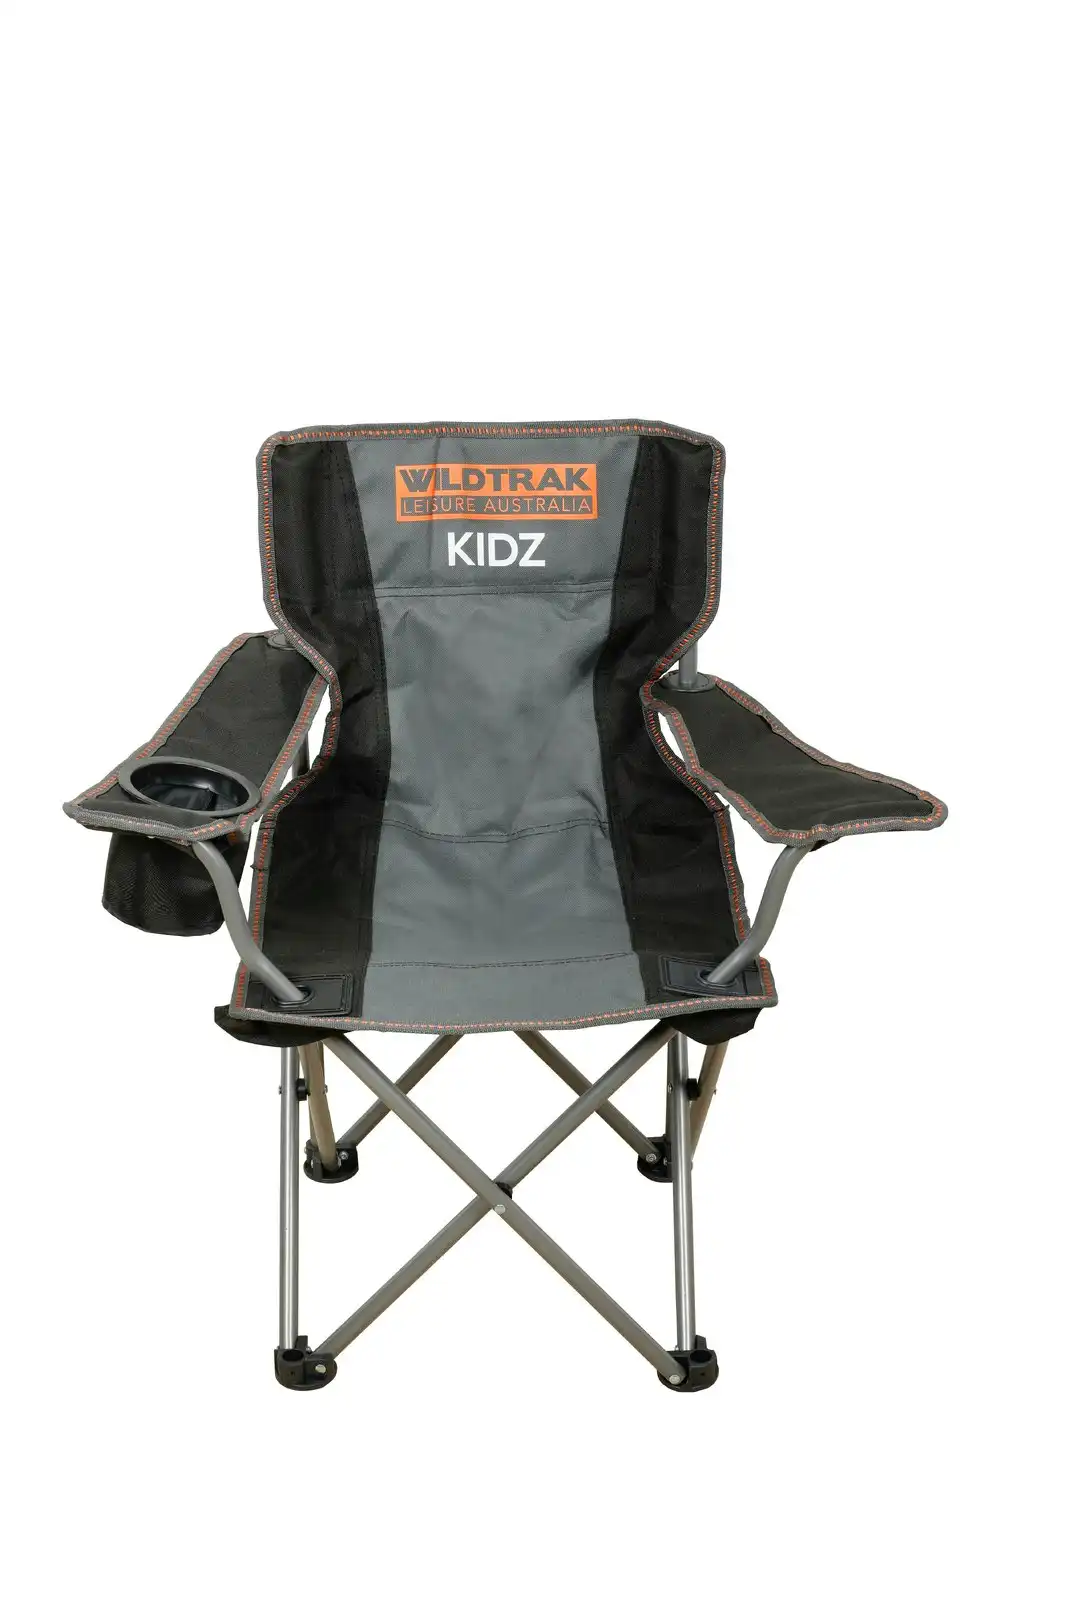 Wildtrak Kidz 67cm Folding Camp Chair Portable Outdoor Camping Seat Grey/Black